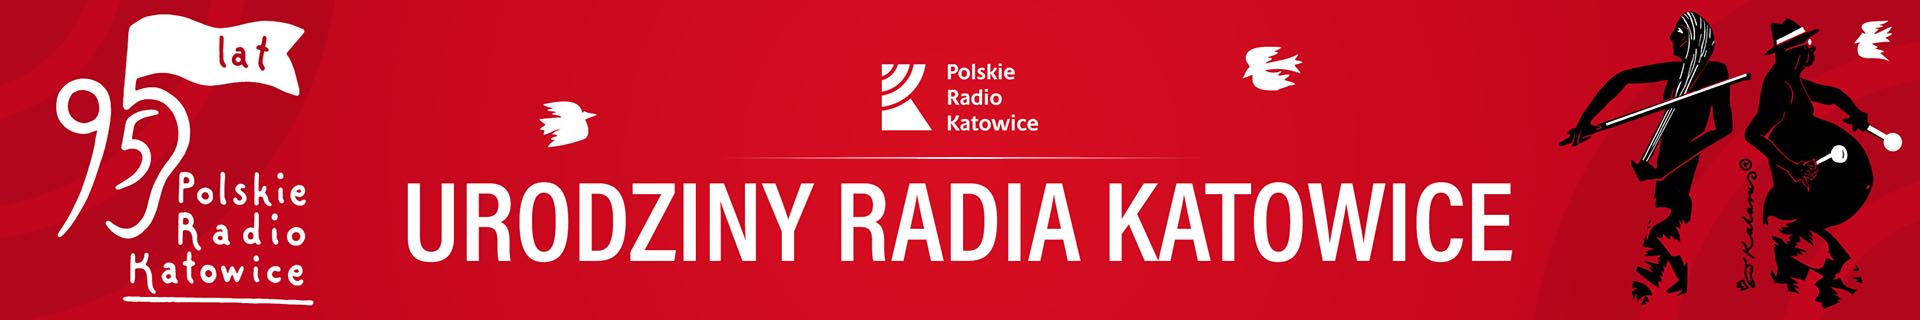 Serwis 95lat Radio Katowice